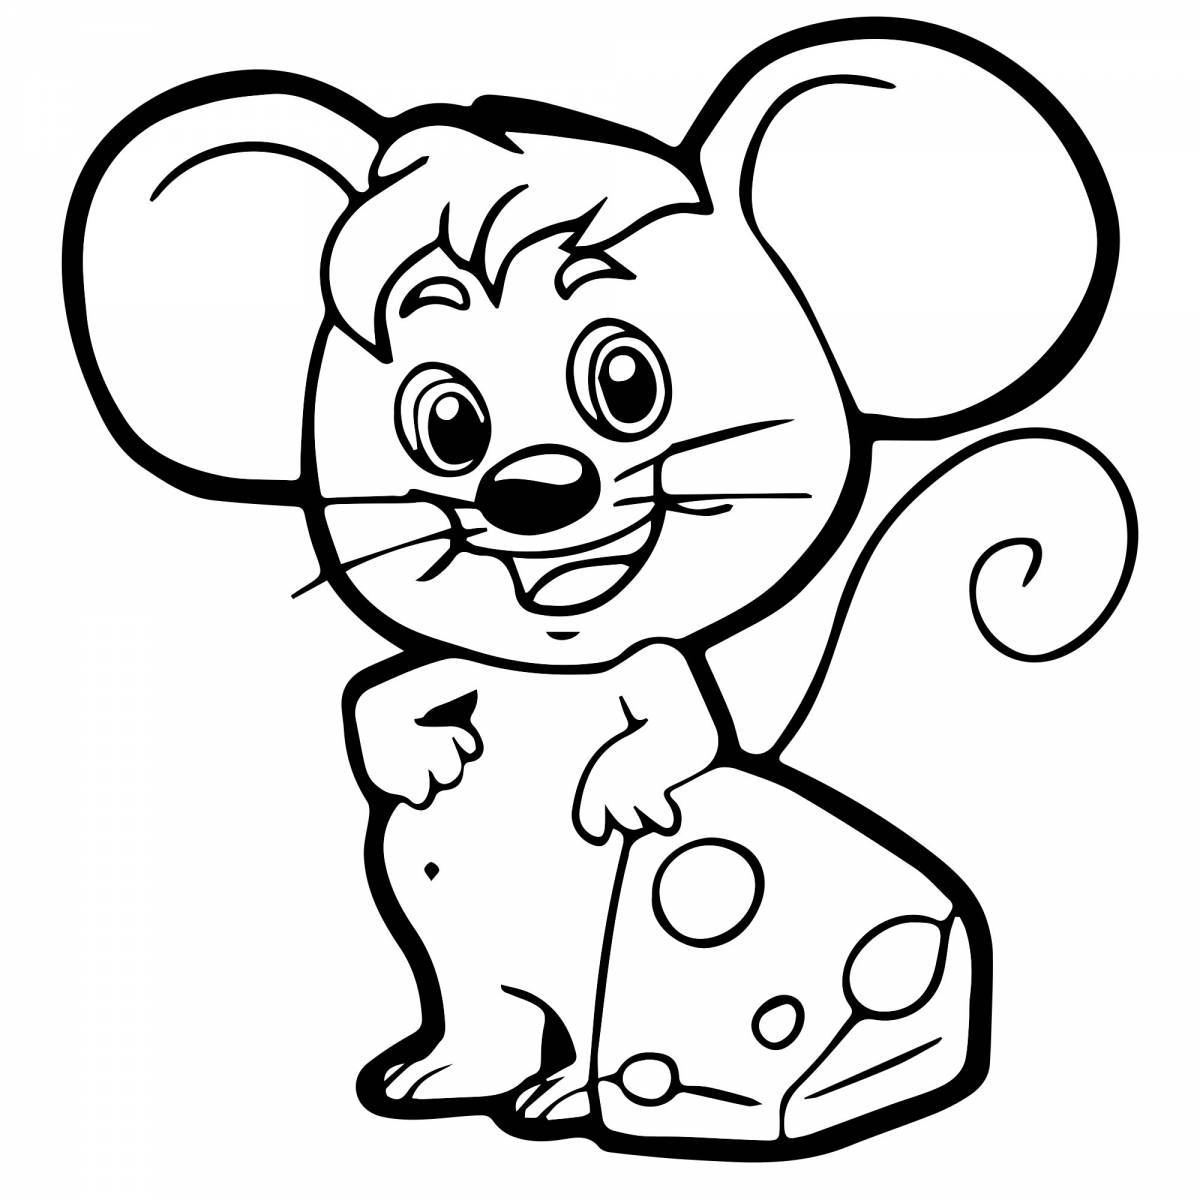 Захватывающая раскраска мышь для детей